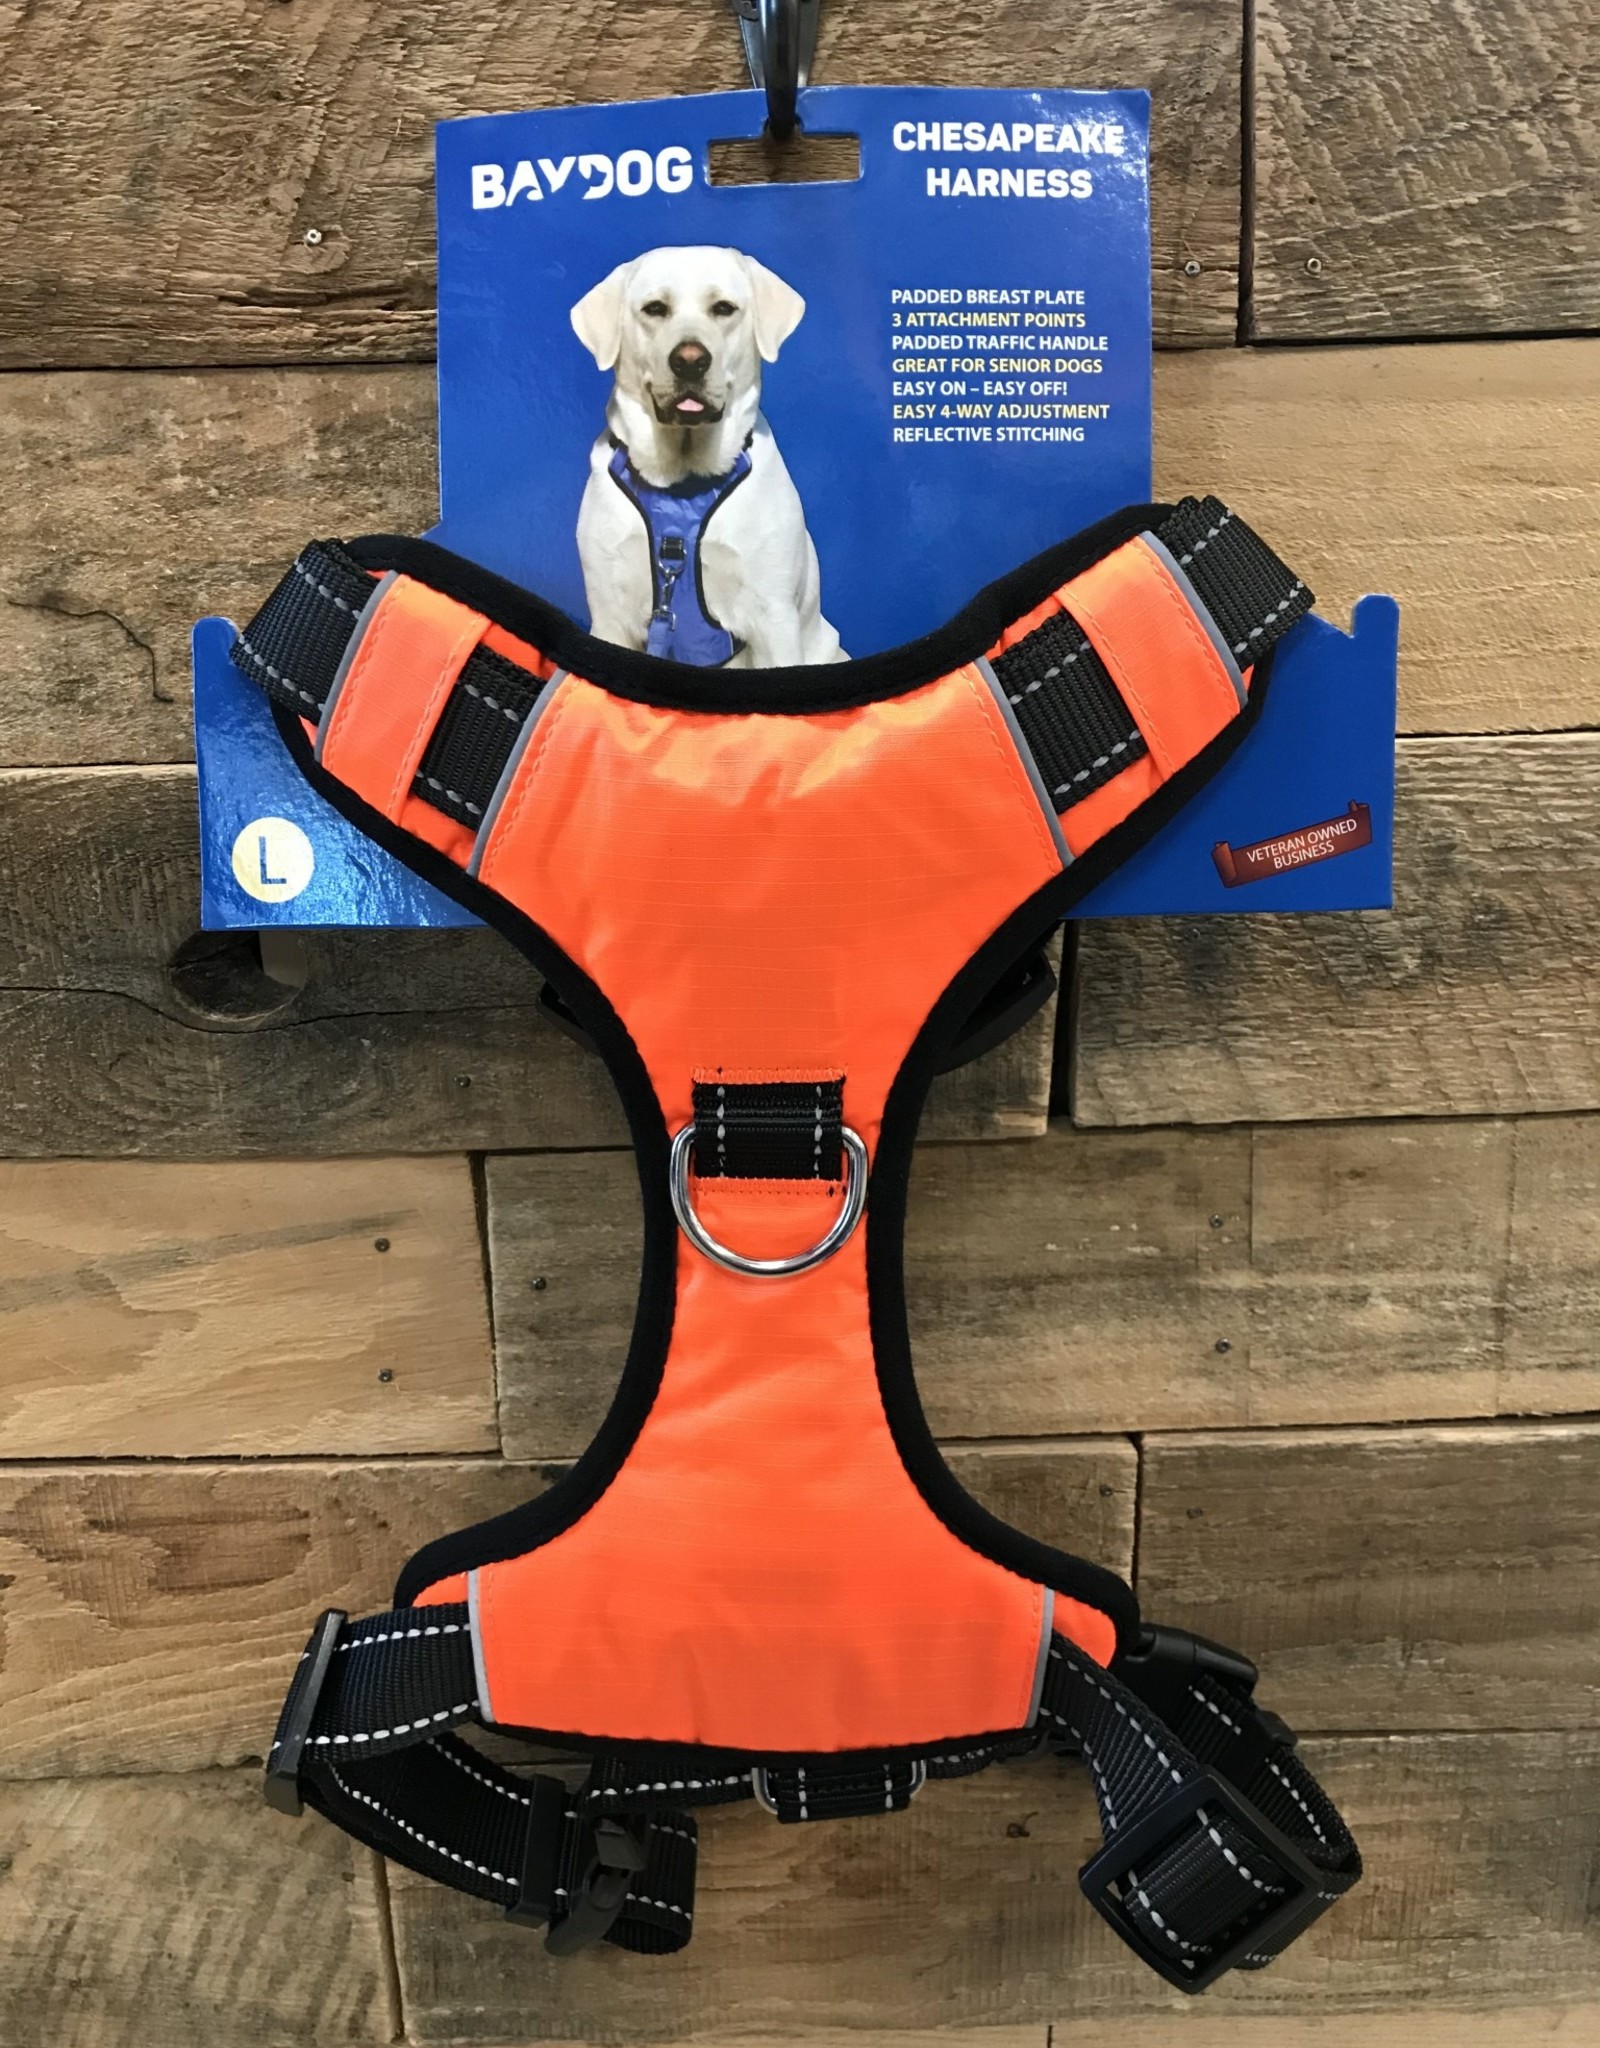 Baydog Large Chesapeake Harness